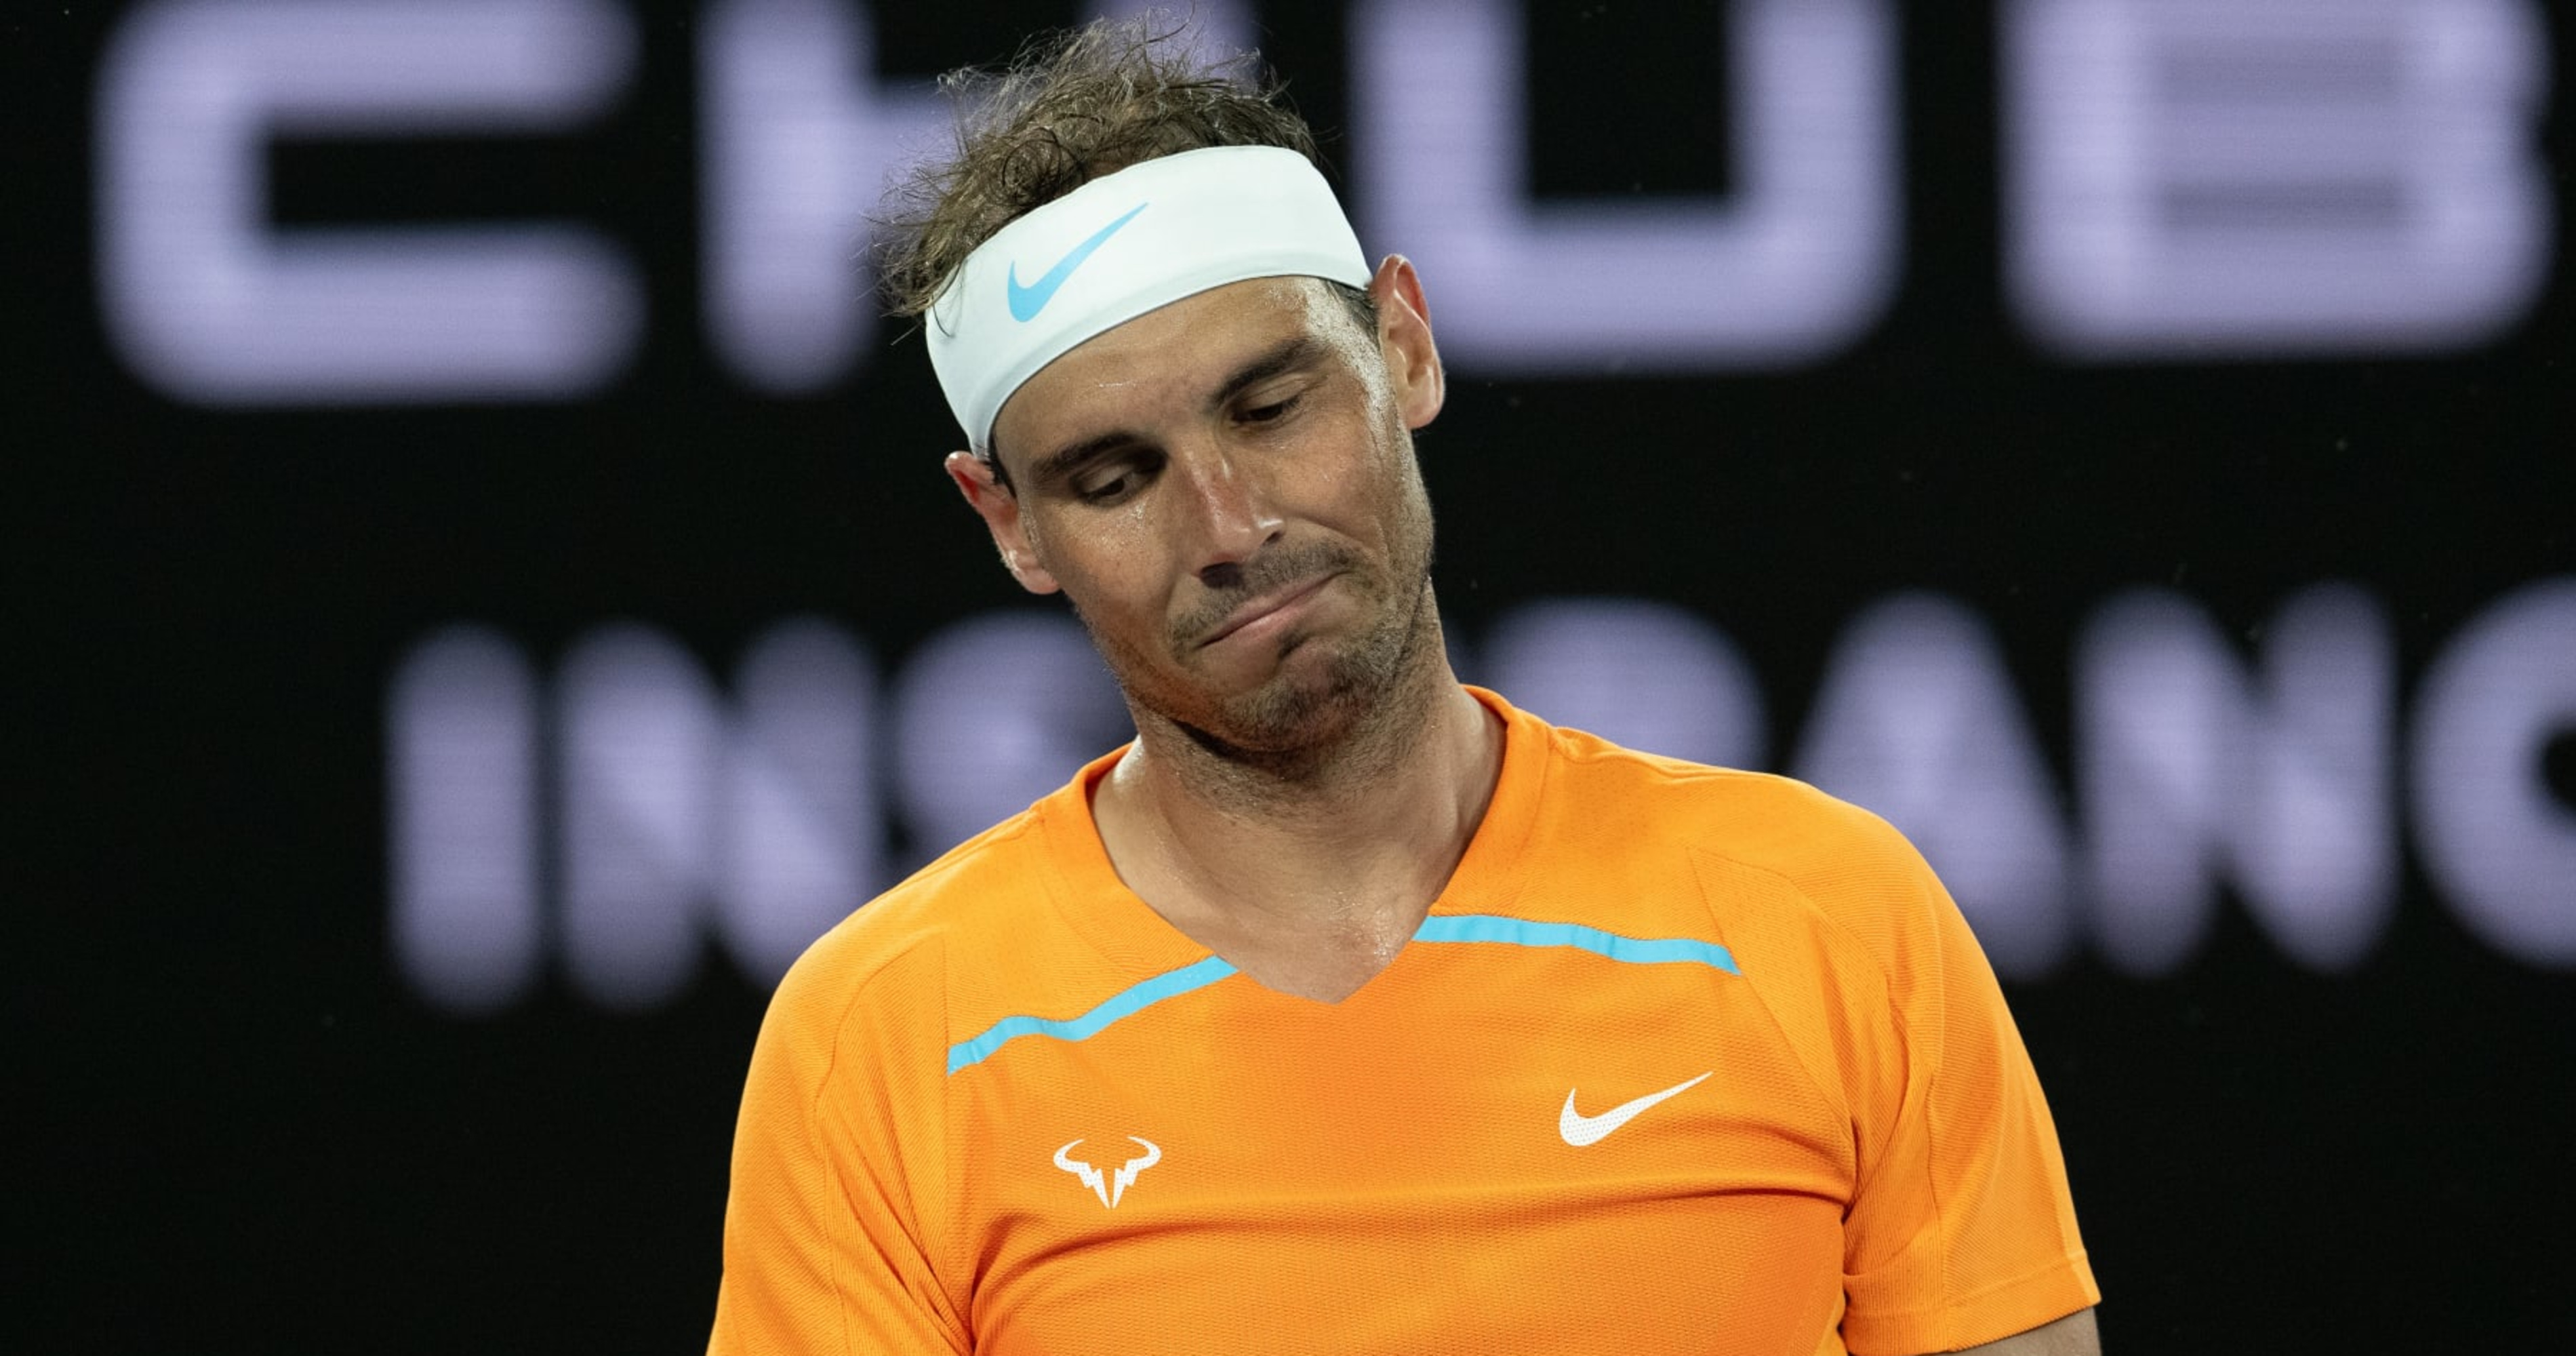 Rafael Nadal's Australian Open Upset Loss to Mackenzie McDonald Stuns